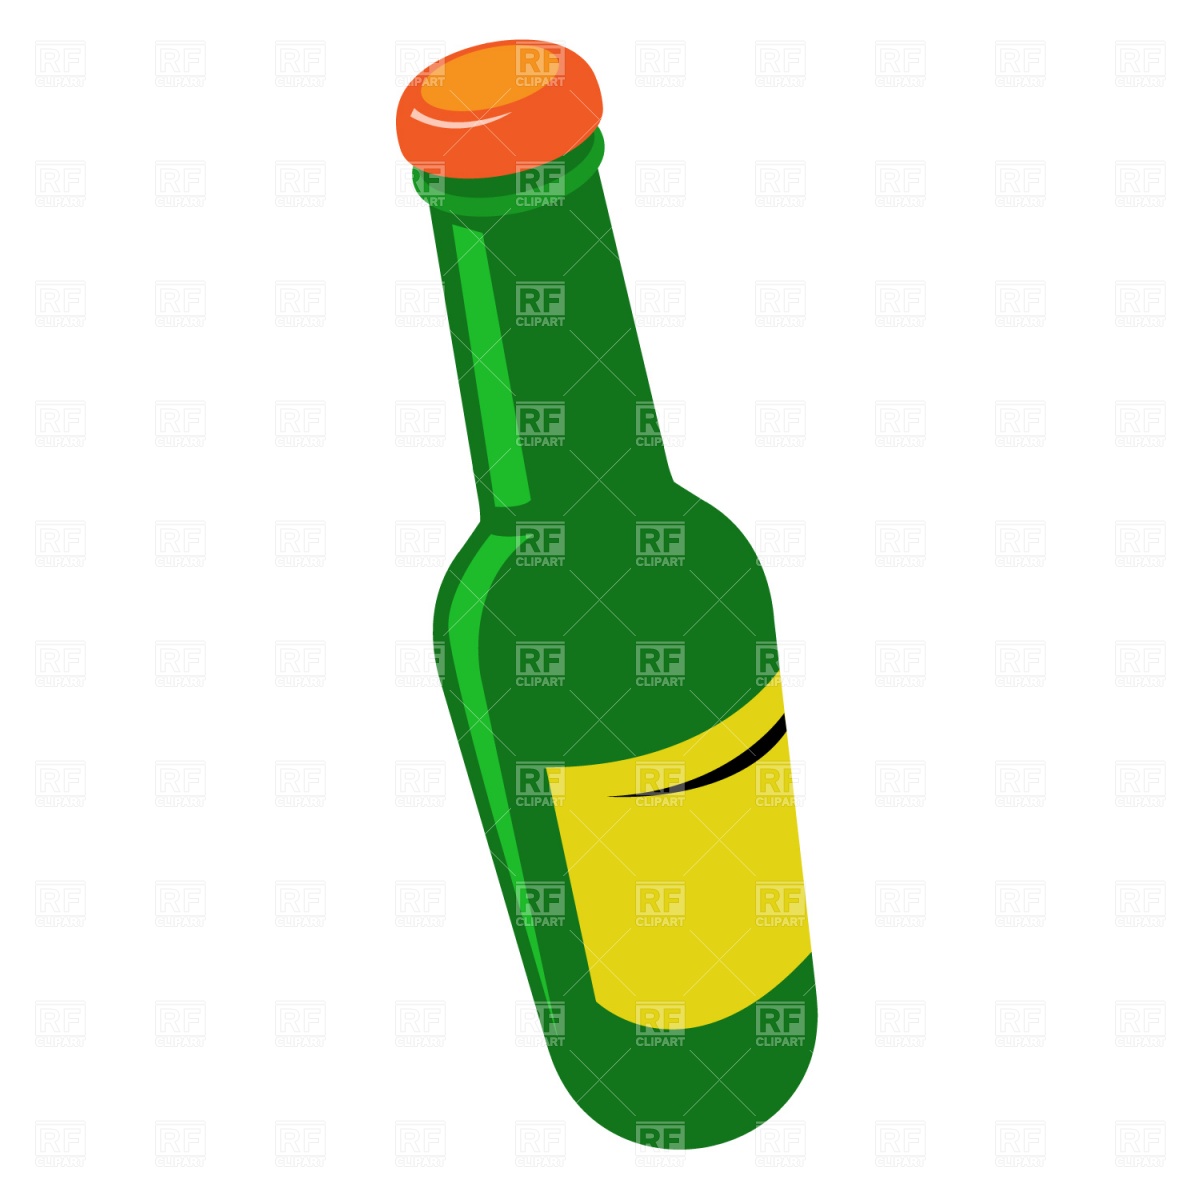 Tilted Beer Bottle Download Royalty Free Vector Clipart  Eps